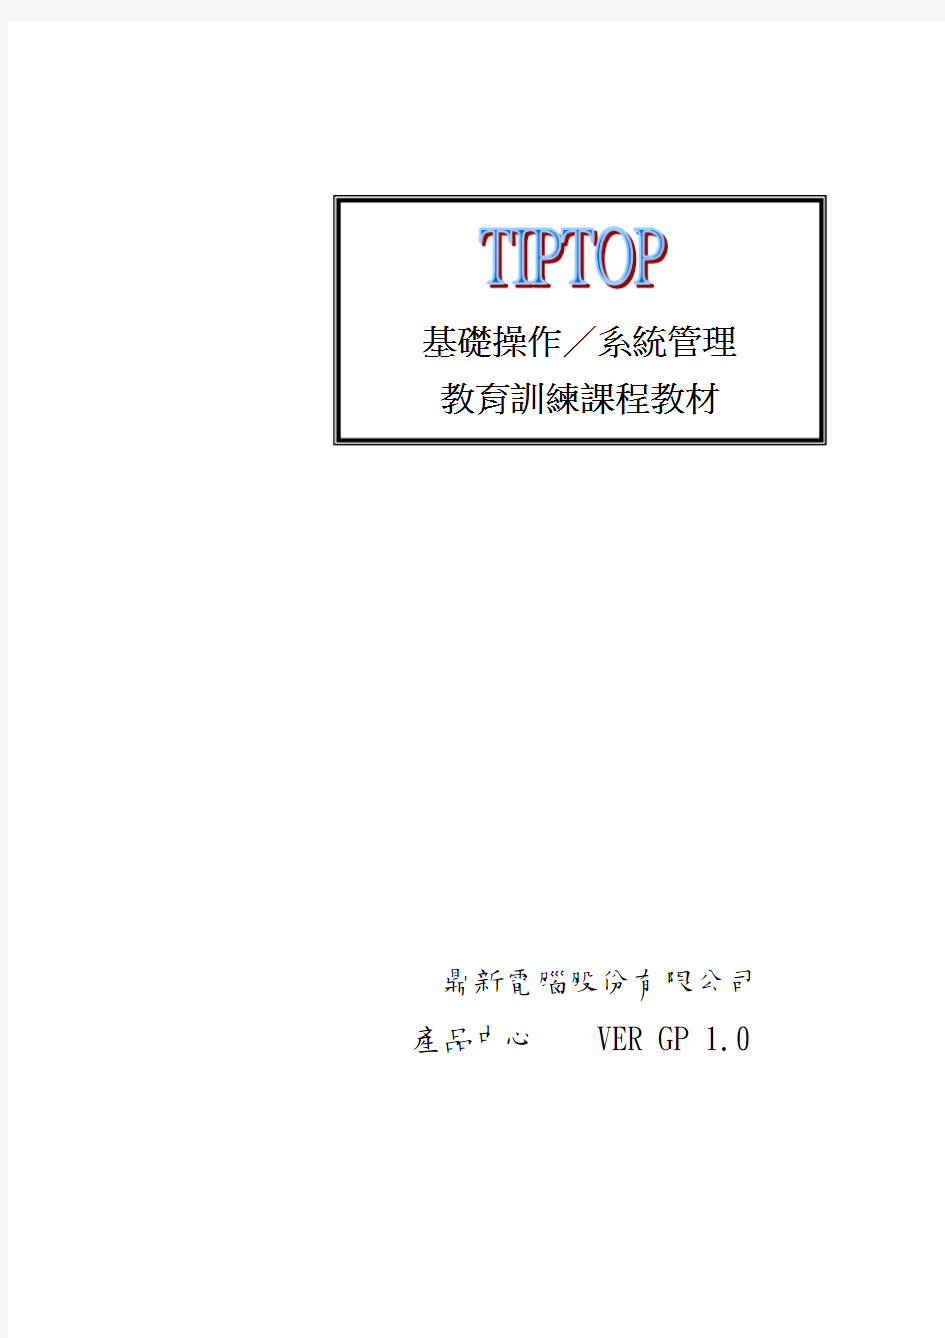 TIPTOP系统管理